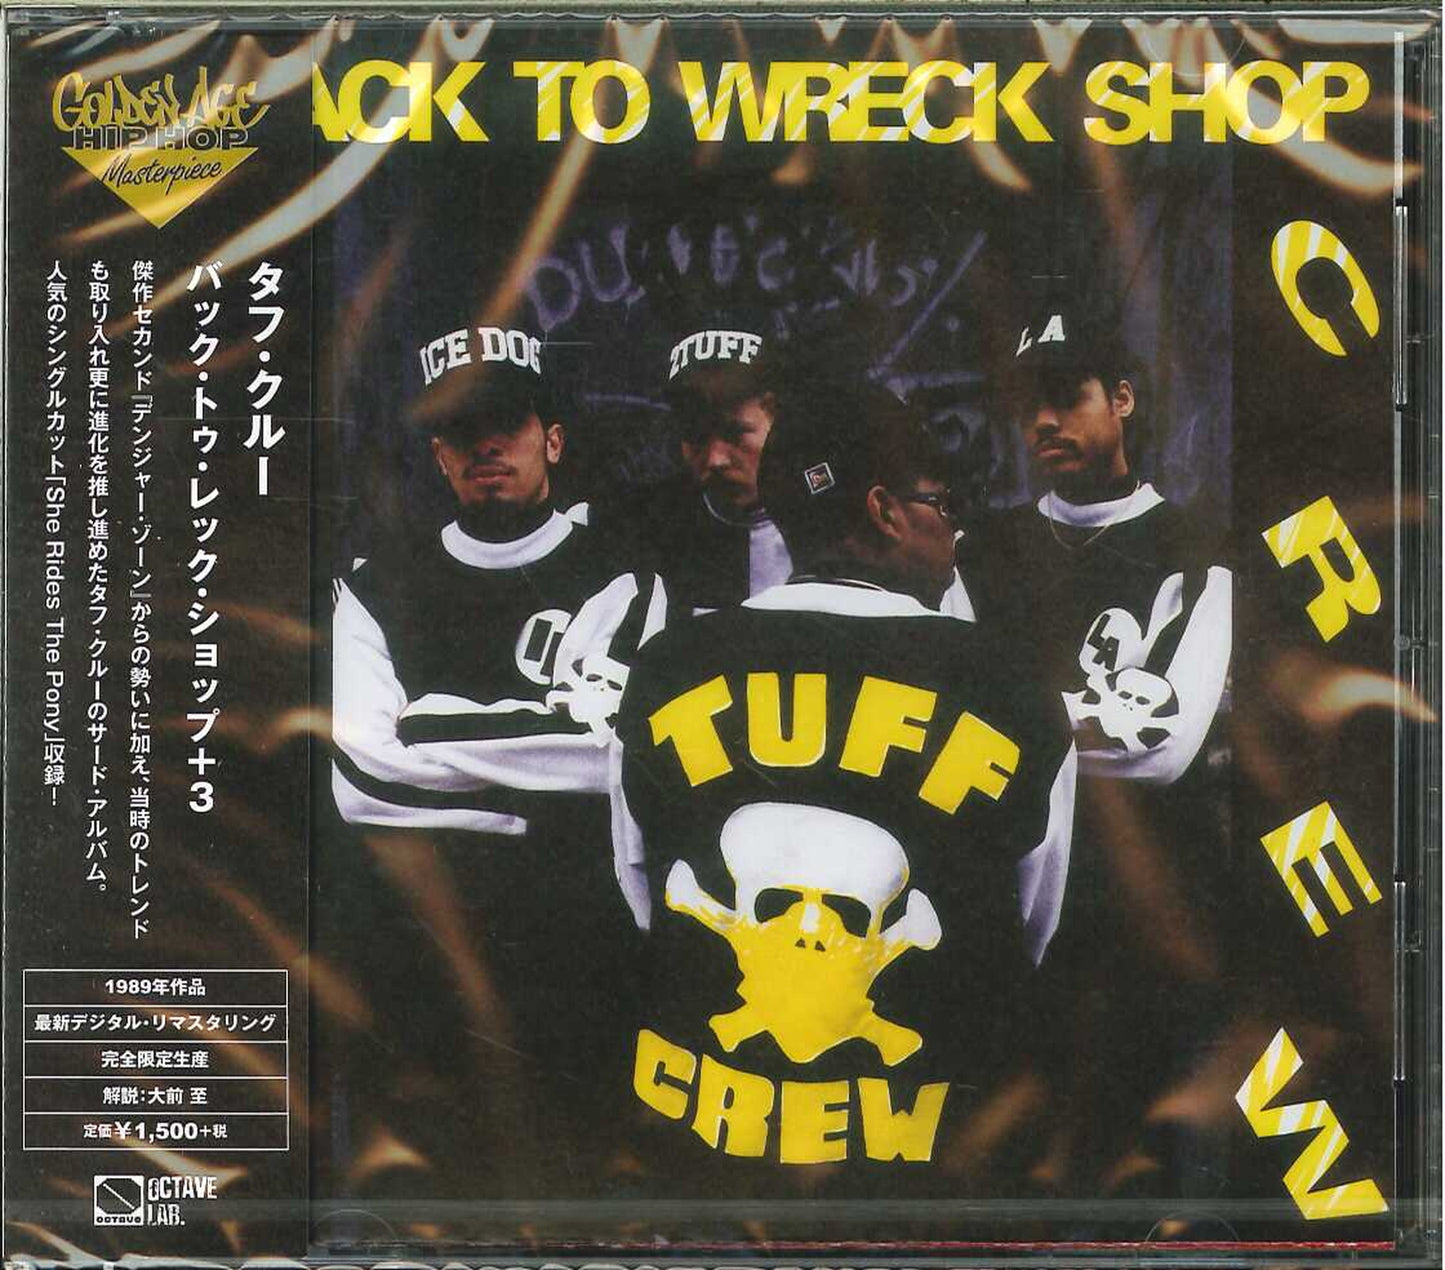 Tuff Crew - Back To Wreck Shop+3 - Japan  CD Bonus Track Limited Edition